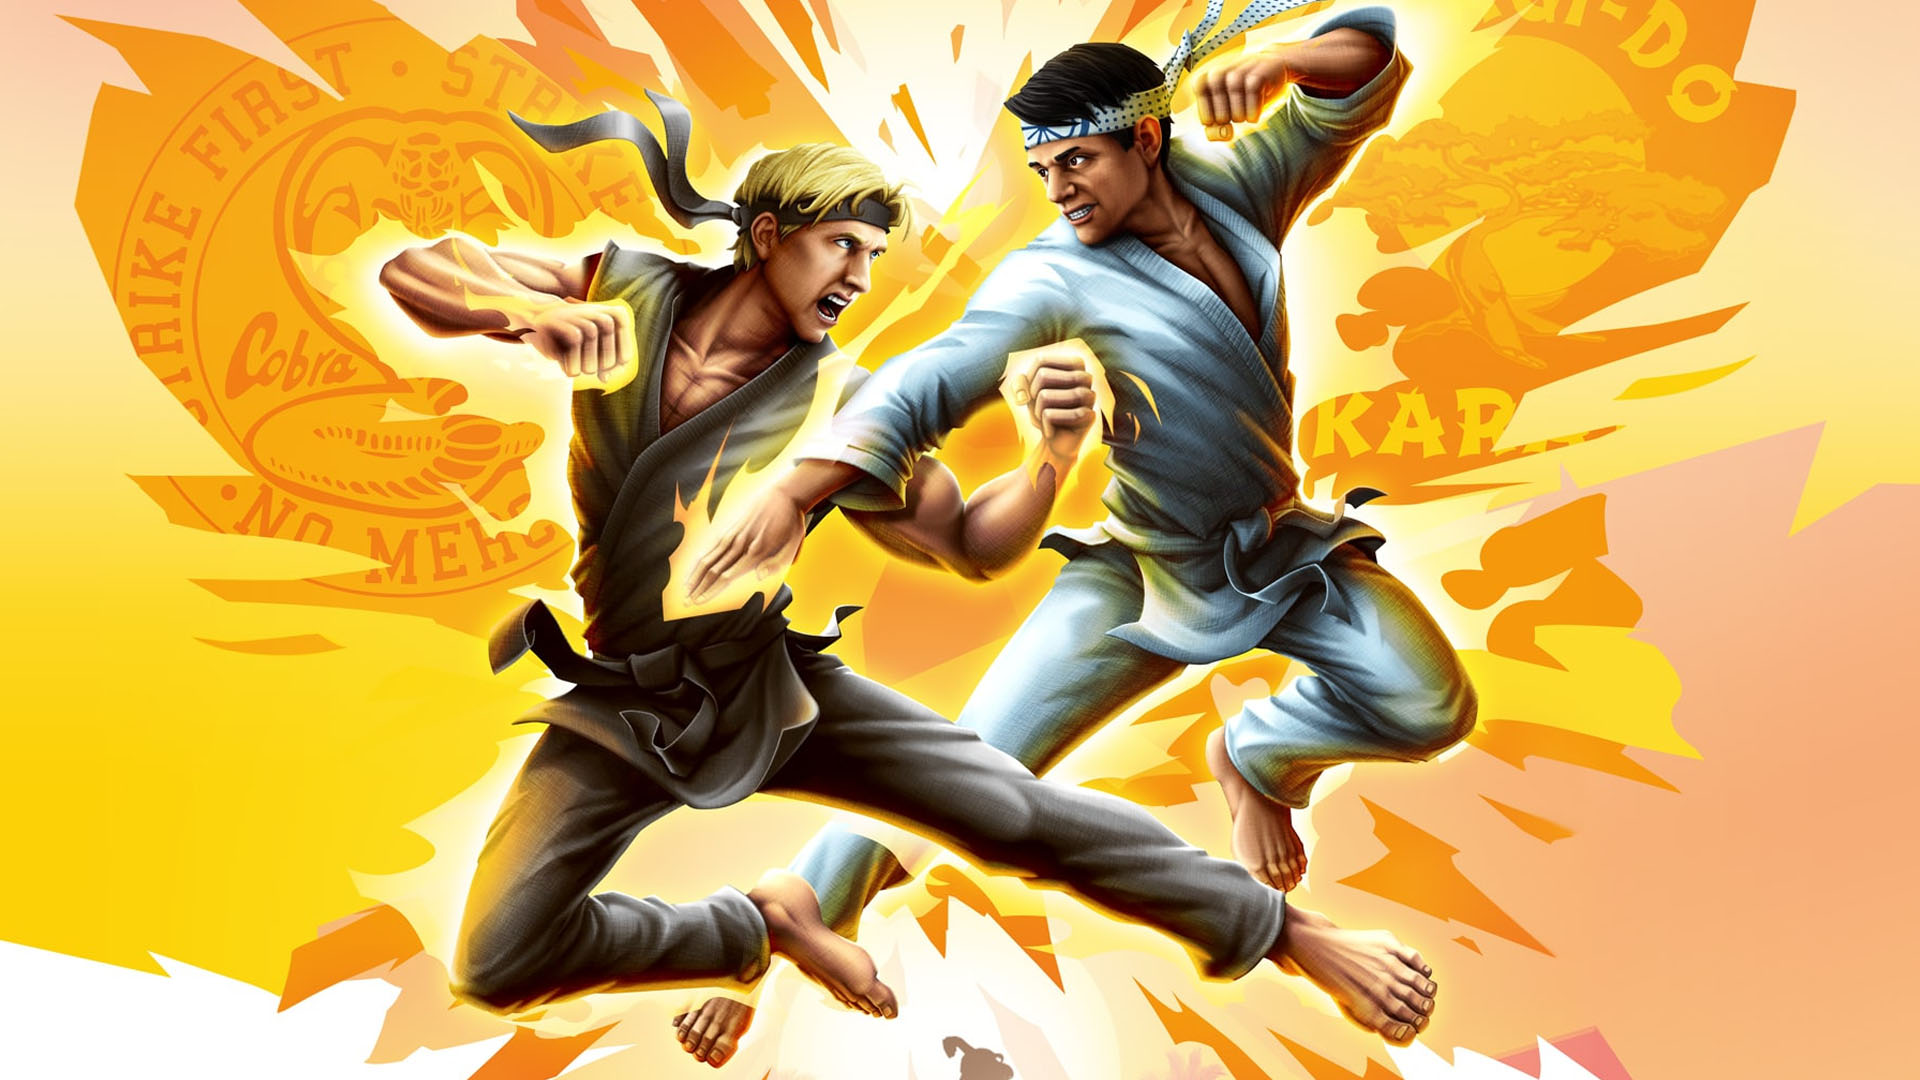 Cobra Kai: The Karate Kid Saga Continues on Steam